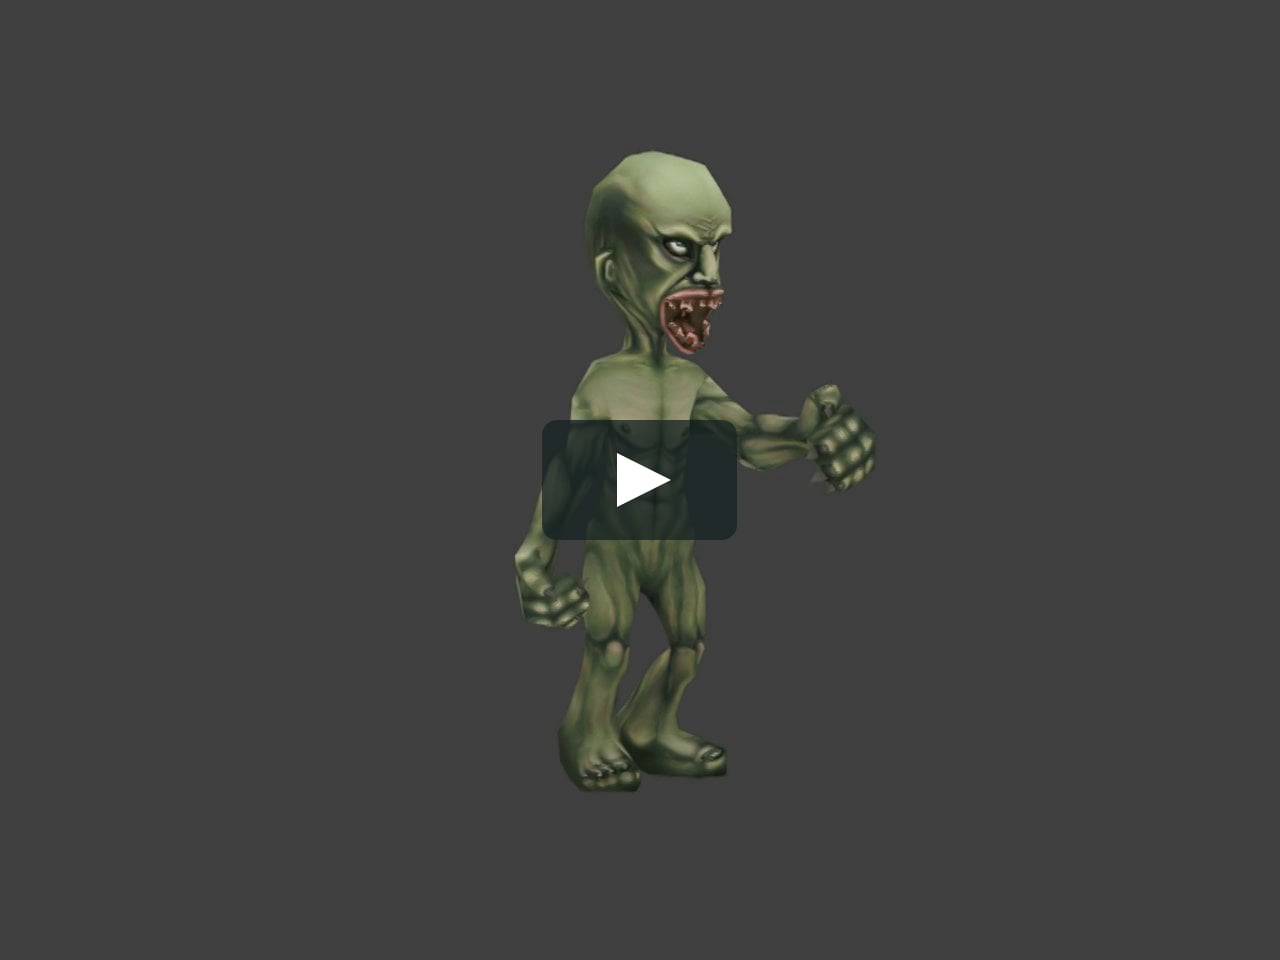 3DOcean & Unity Asset Store - Zombie 1 on Vimeo